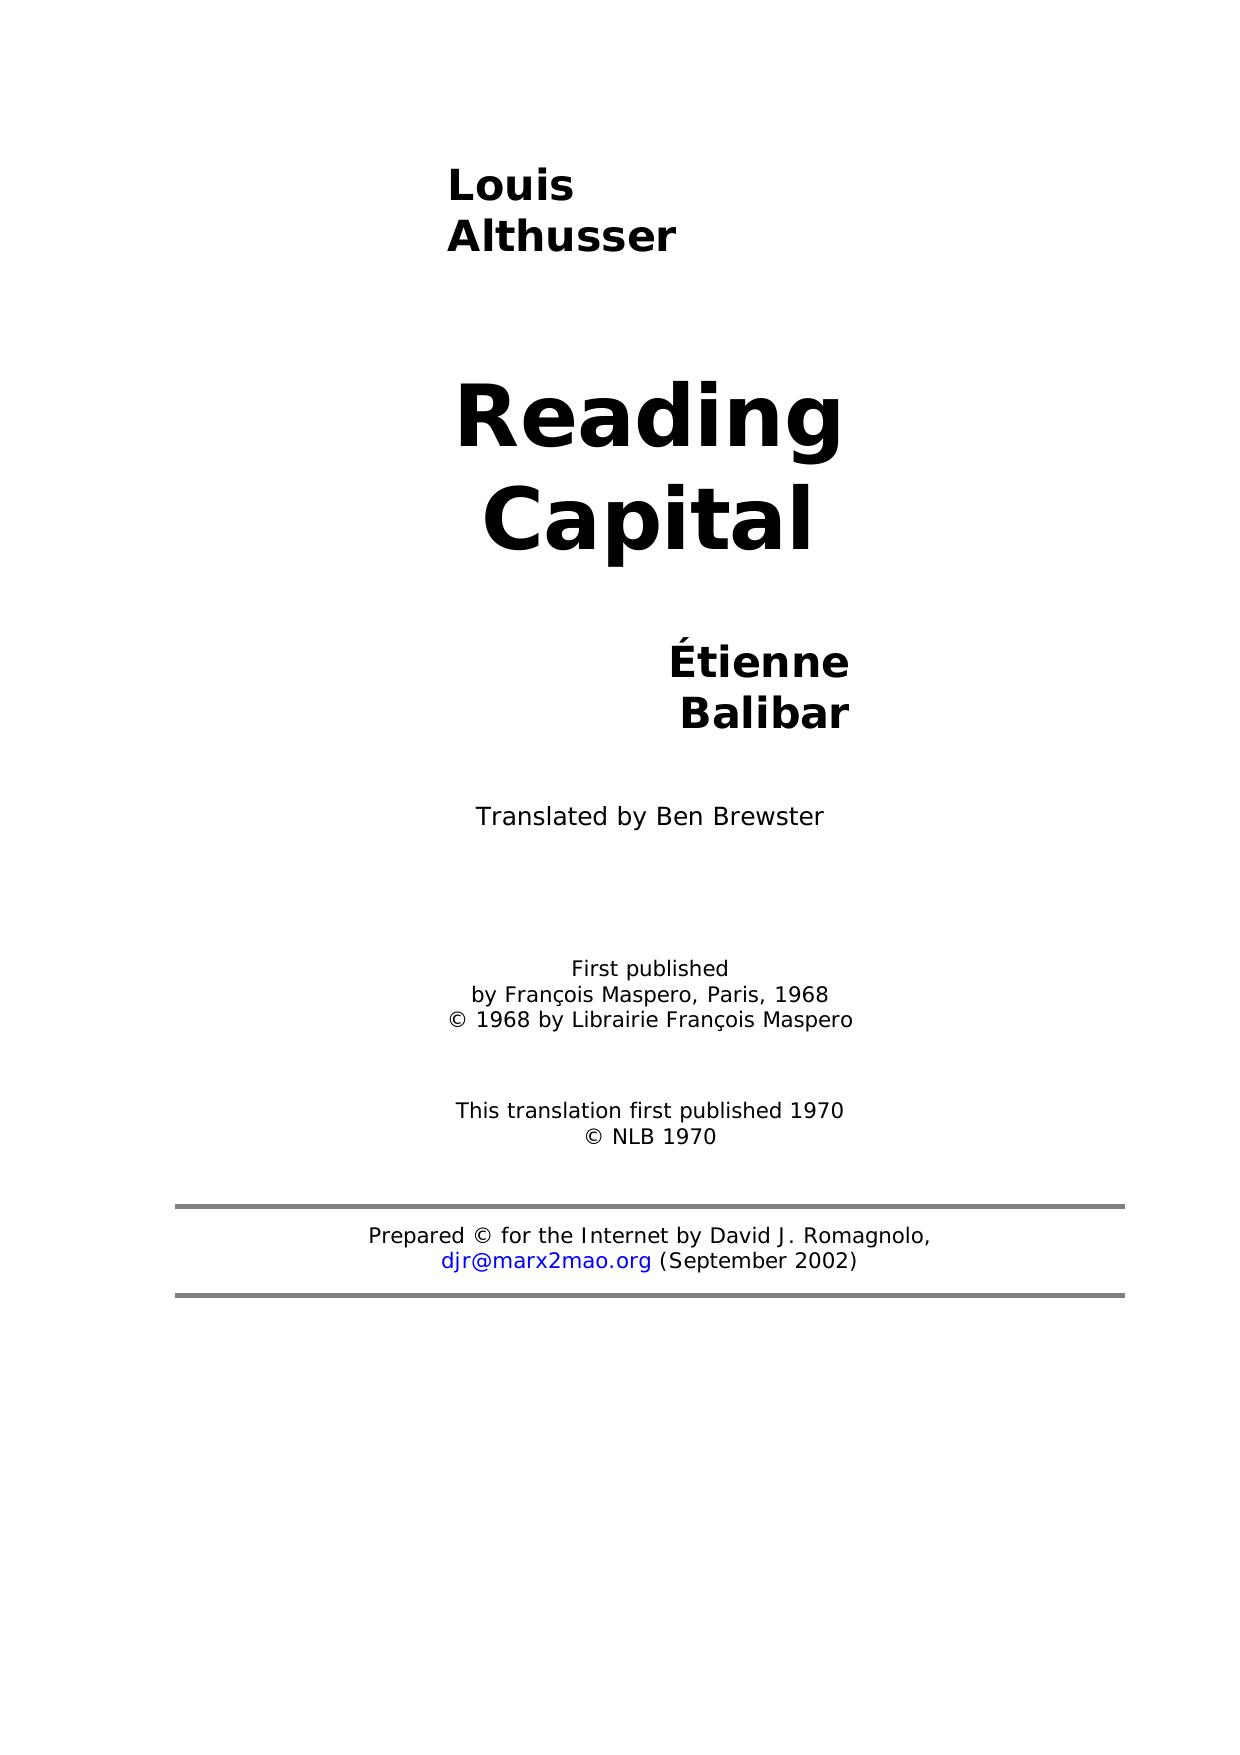 Reading Capital by Louis Althusser & Étienne Balibar